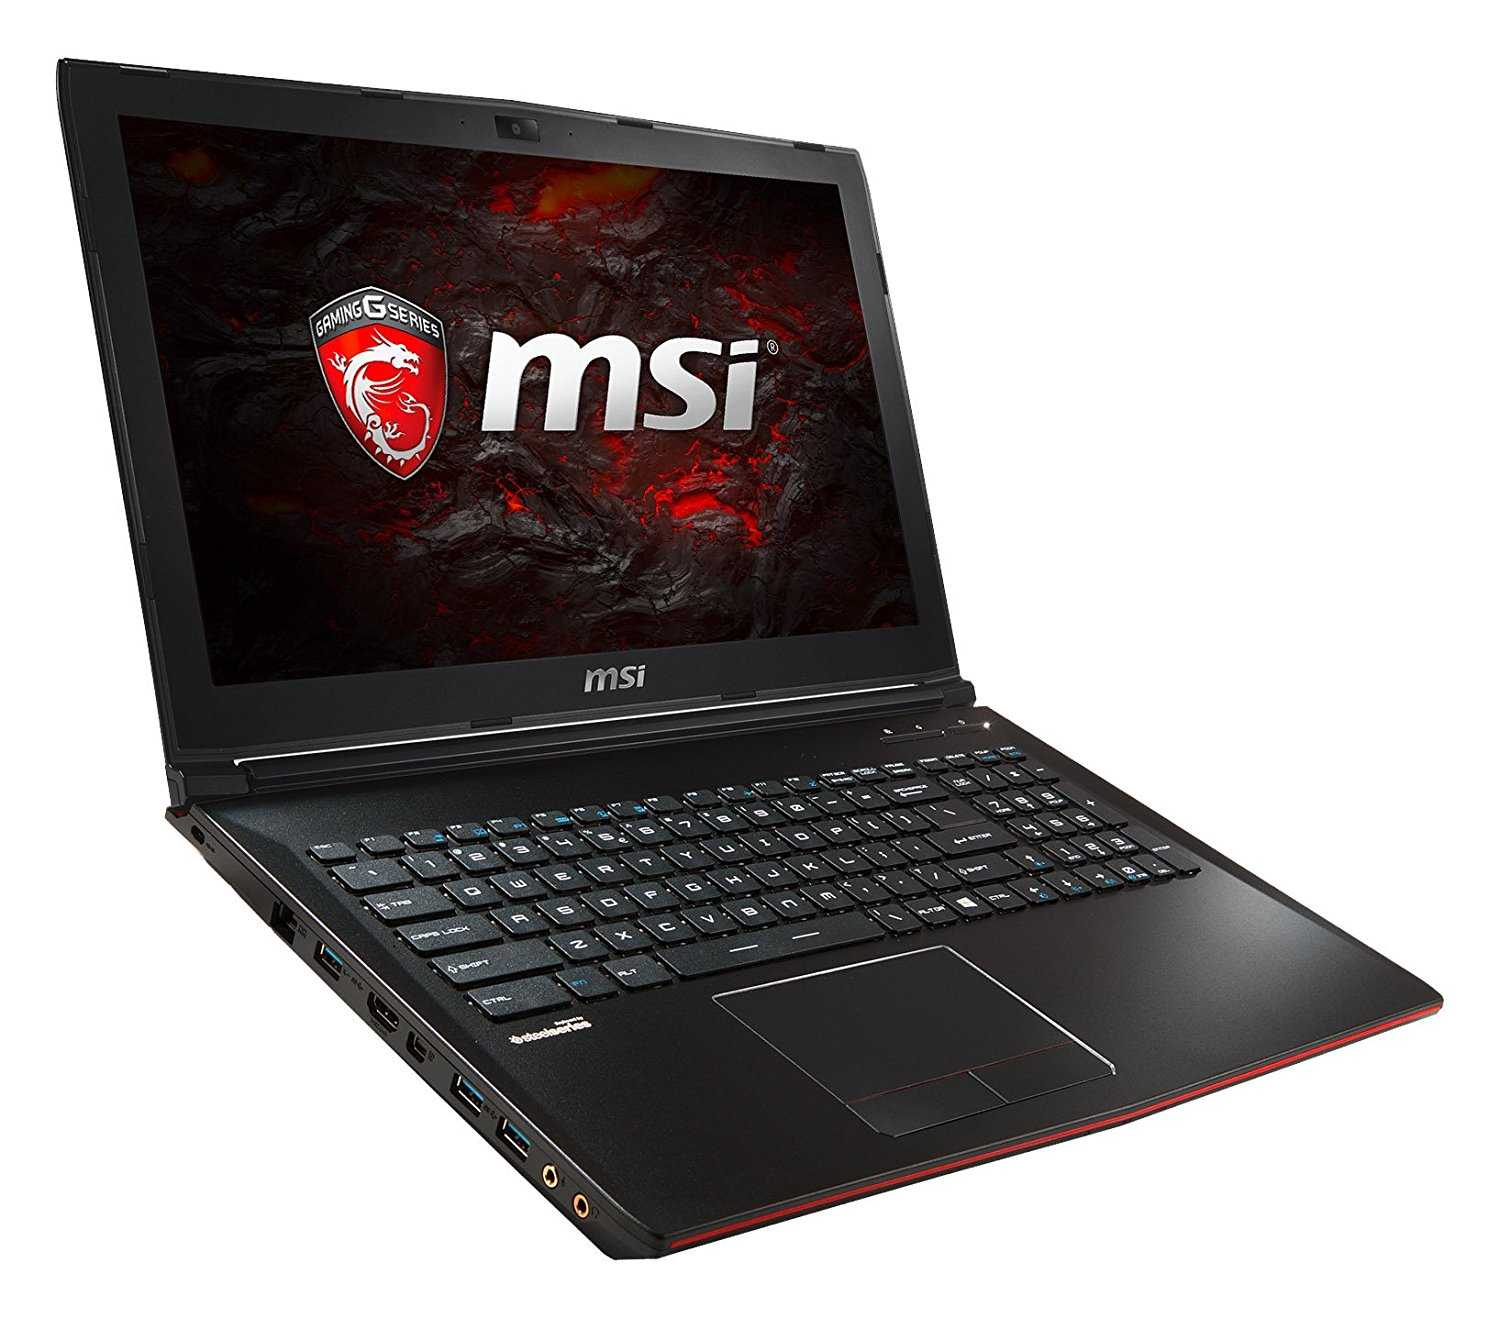 Msi cx62 7ql - купить , скидки, цена, отзывы, обзор, характеристики - ноутбуки